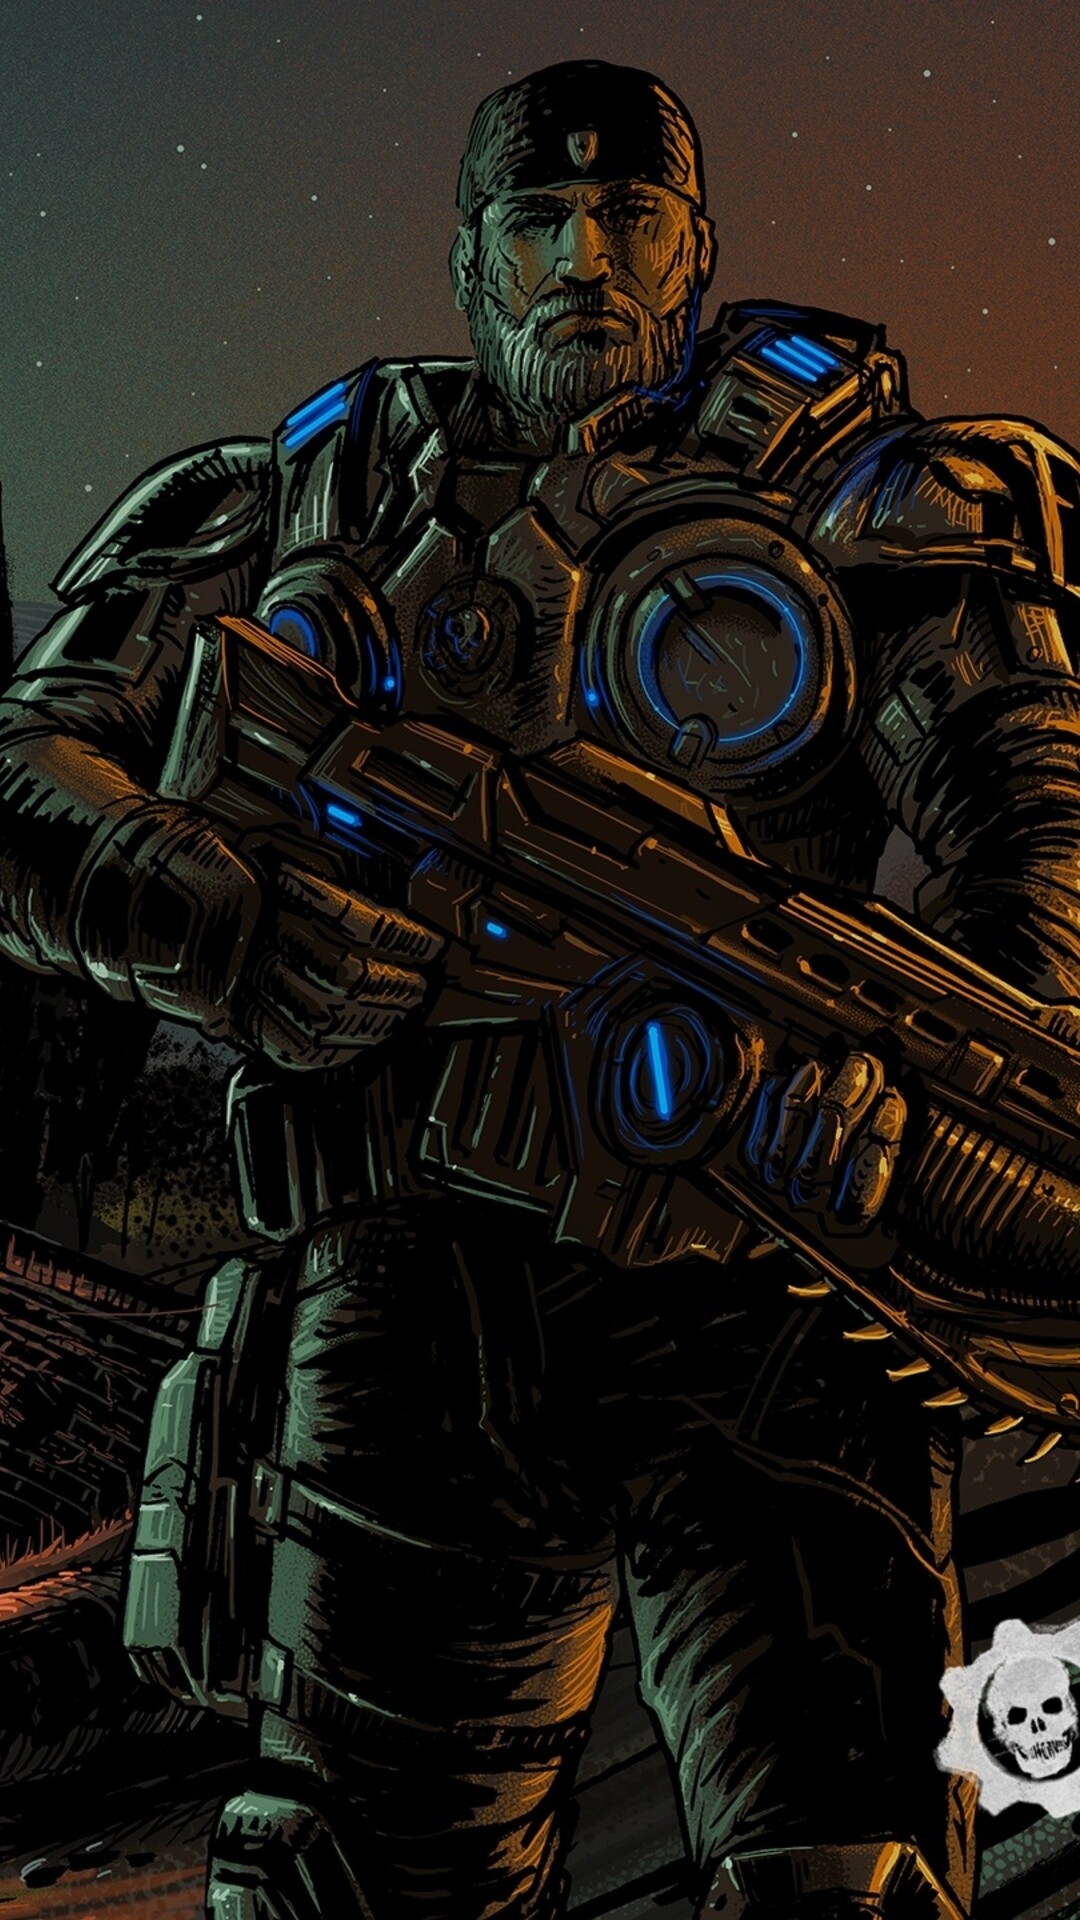 Gears of War: Marcus Fenix, Mark 2 Lancer Assault Rifle, Never fight alone, The Coalition. 1080x1920 Full HD Wallpaper.